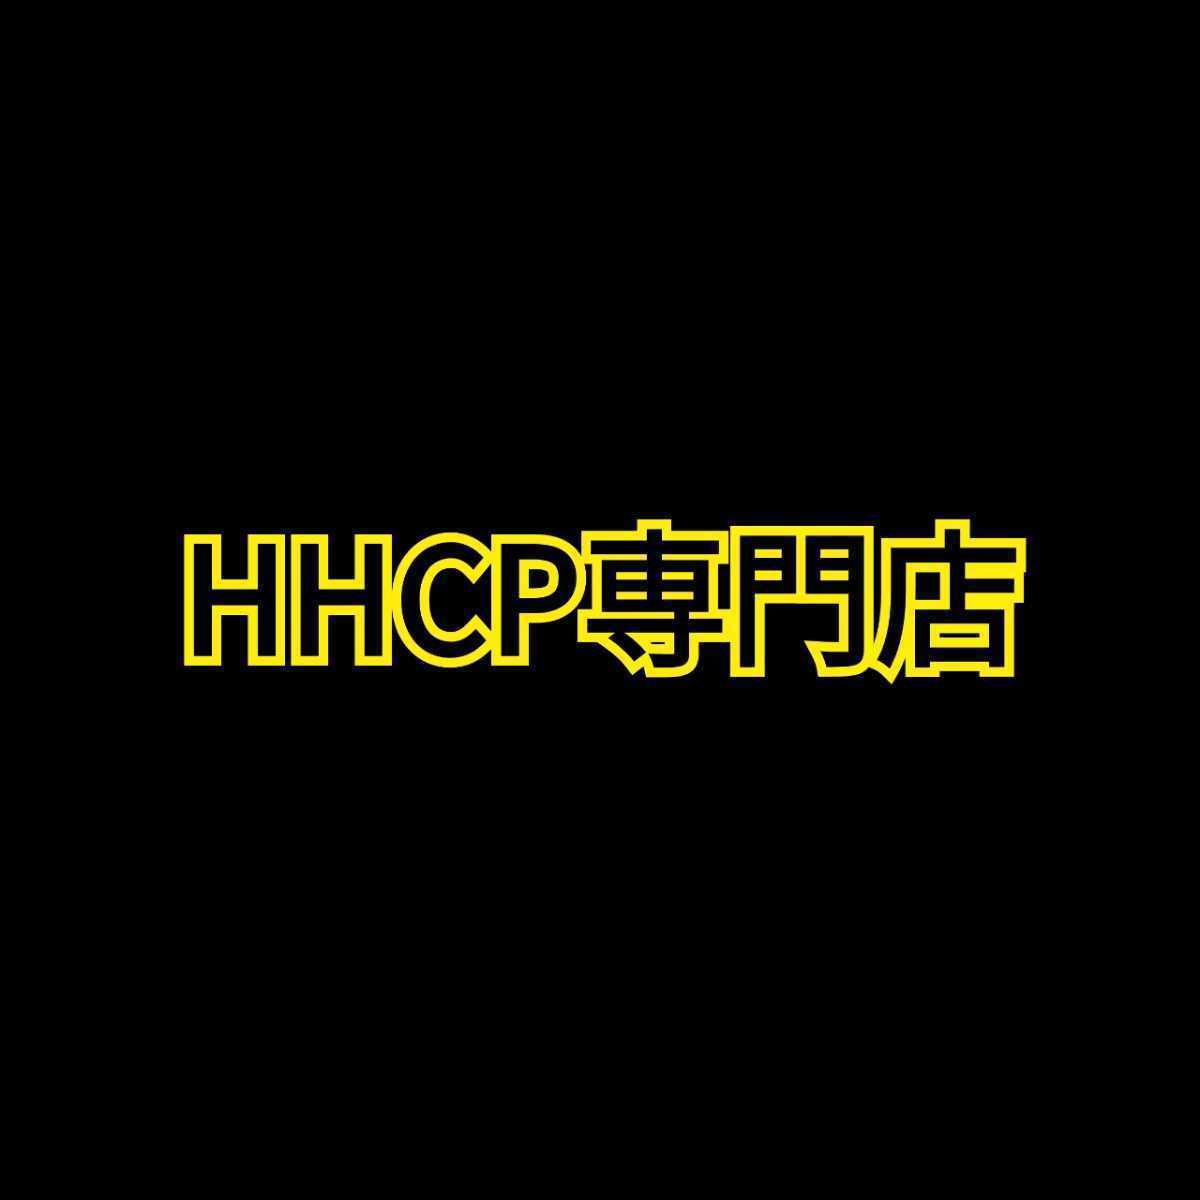 HHCP15% hhcP